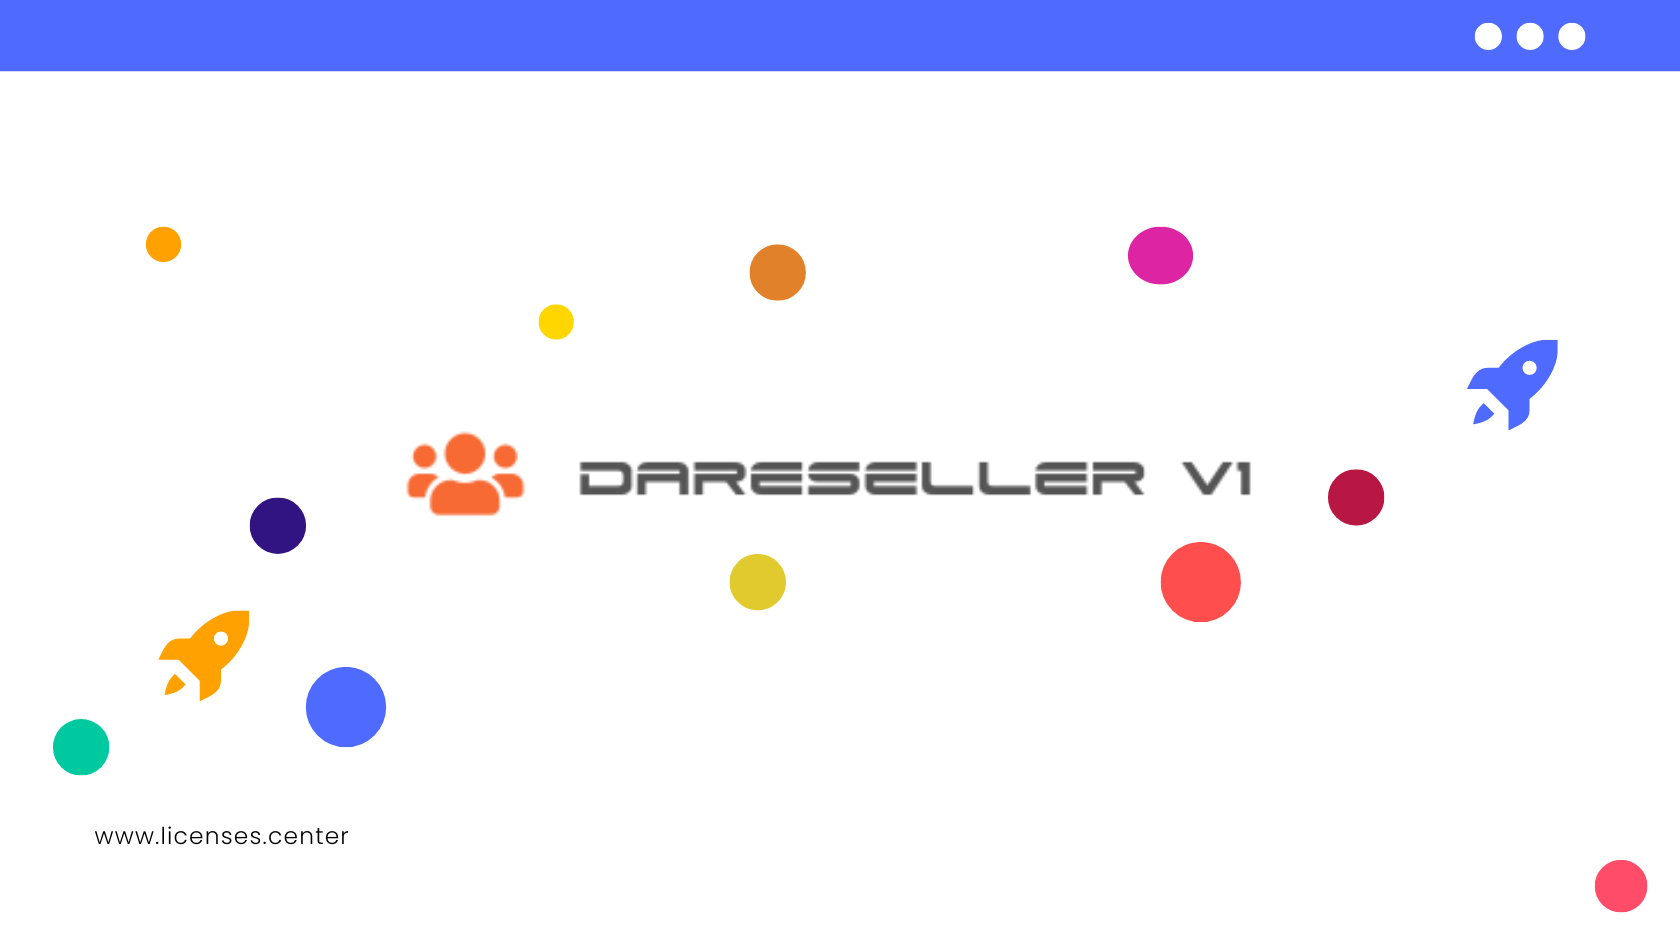 DAReseller Shared License